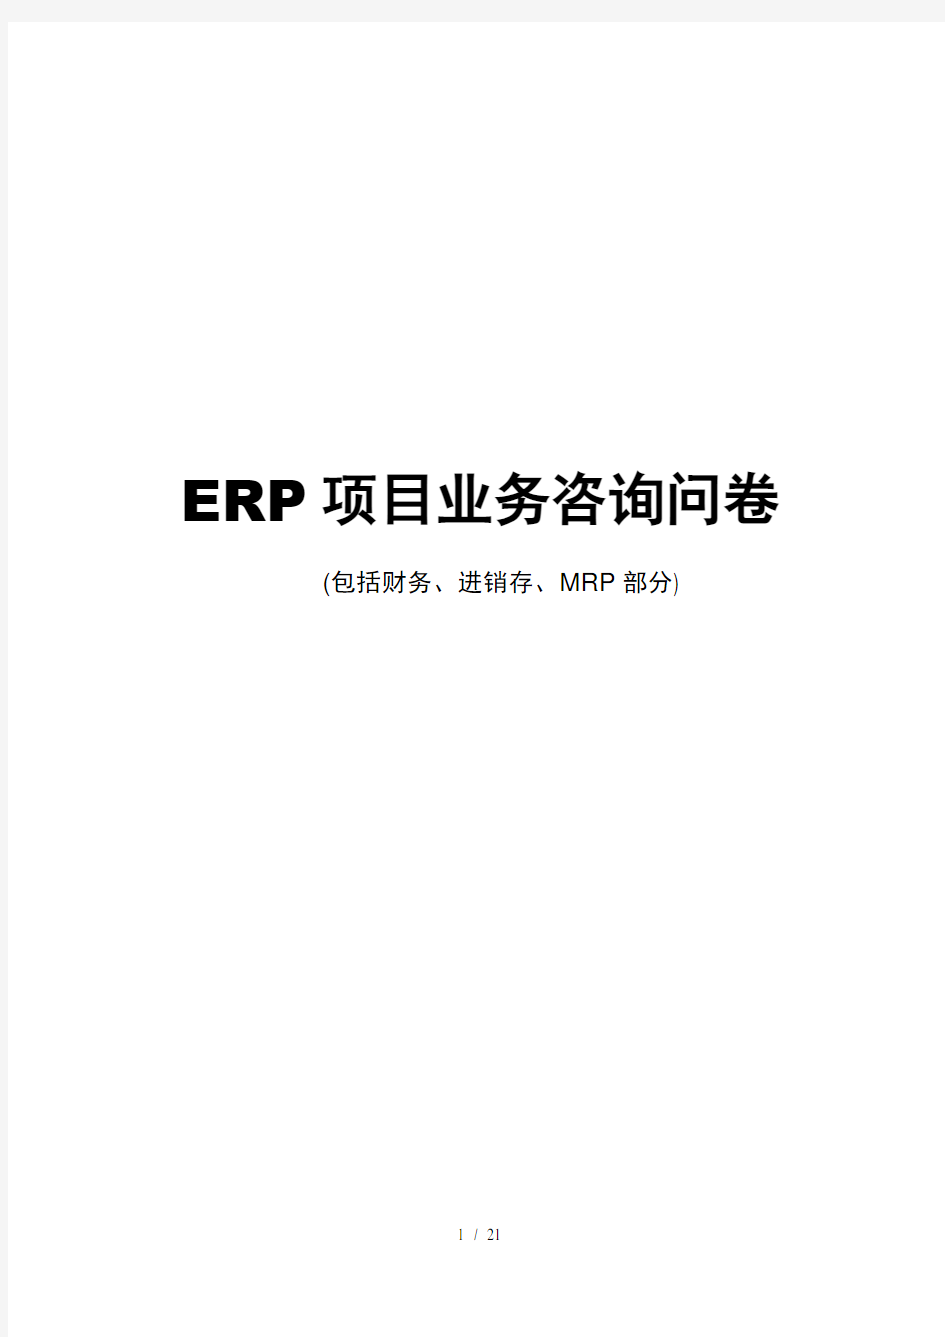 ERP系统调研问卷